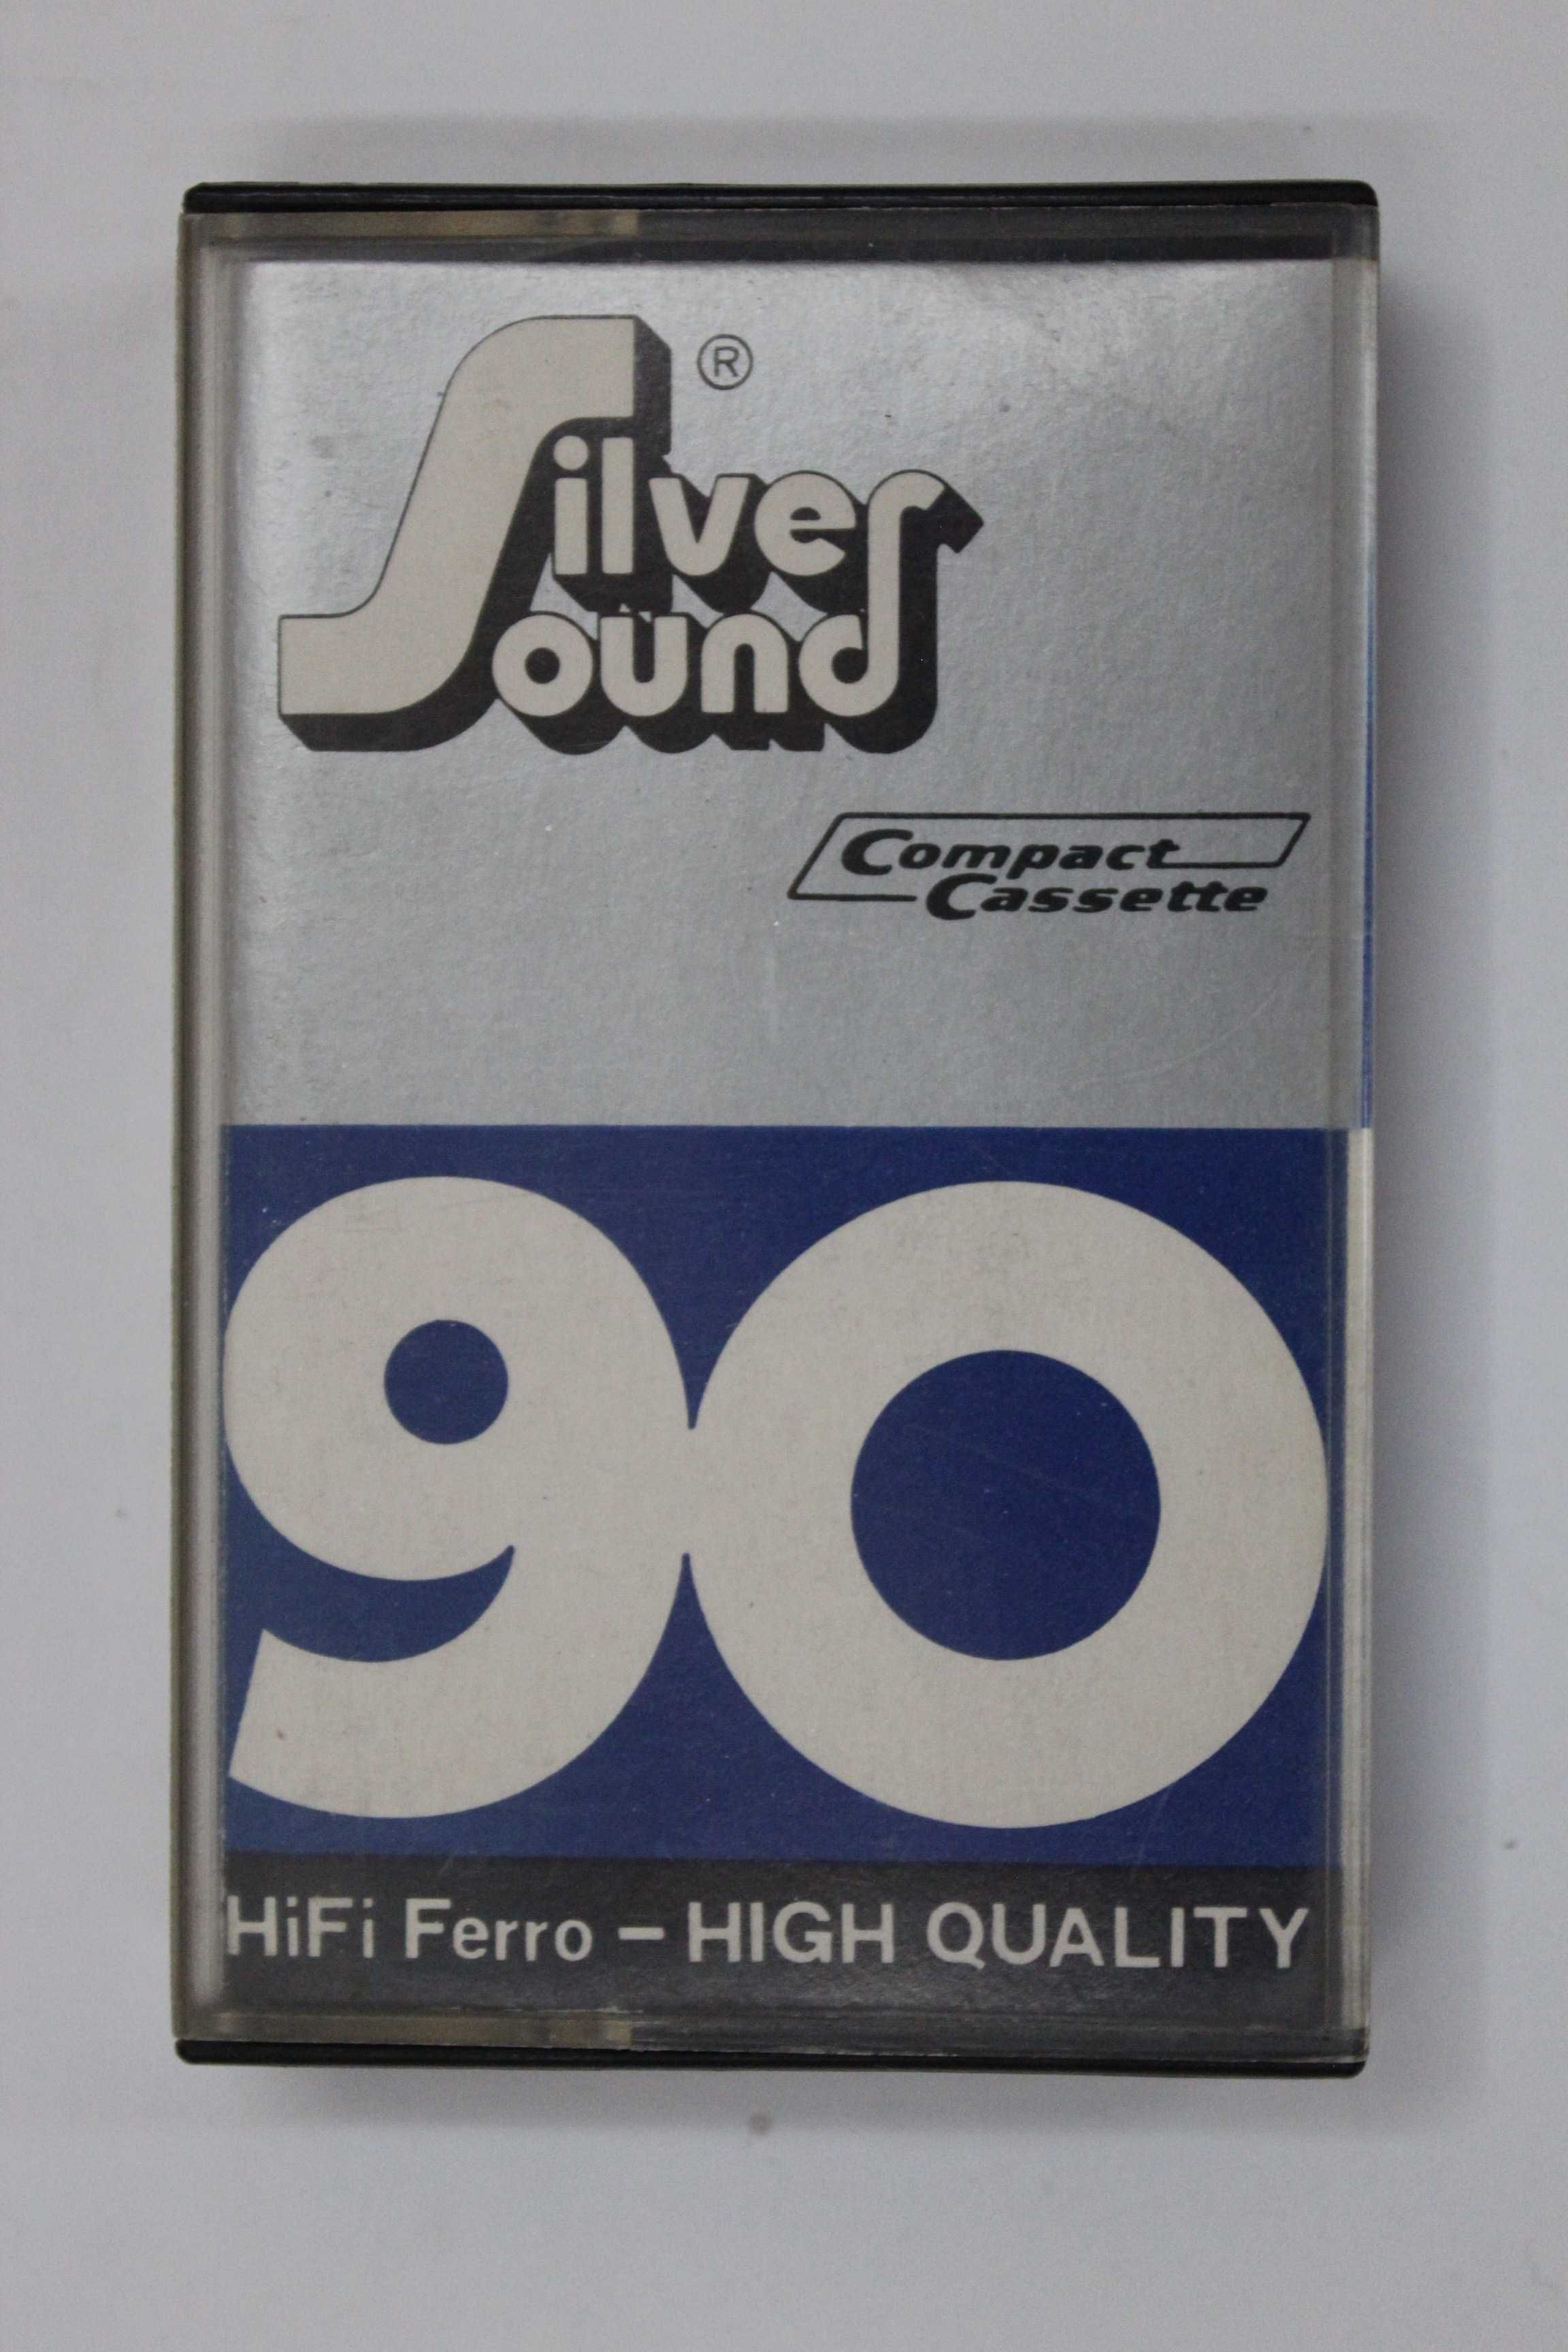 Аудиокассета кассета SILVER SOUND C-90 Hi-Fi Ferro / compact cassette